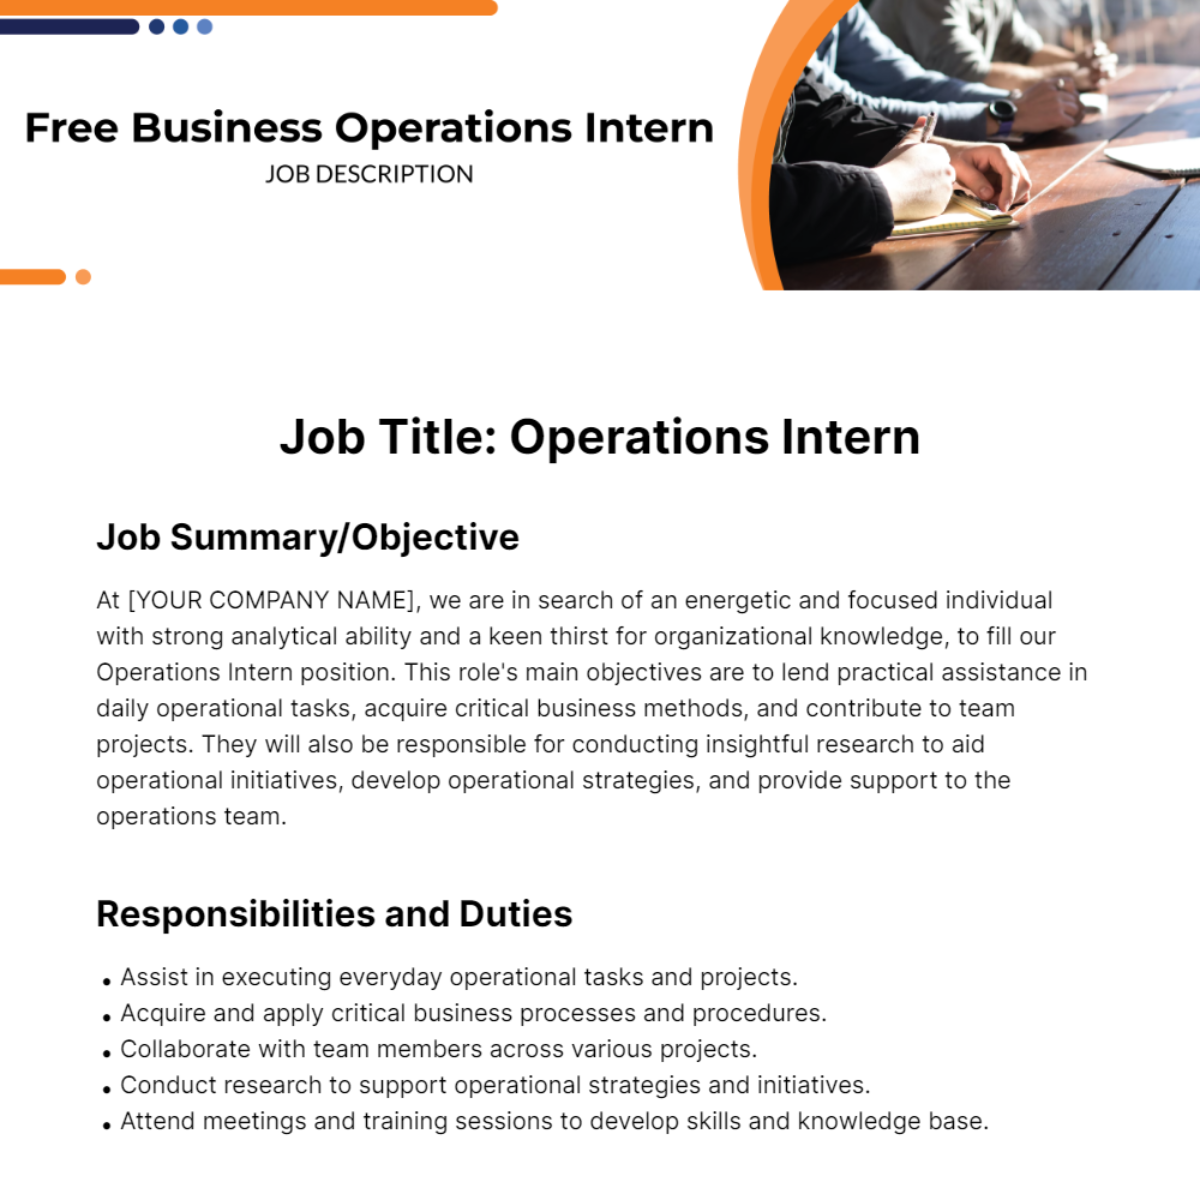 Free Business Operations Intern Job Description Template